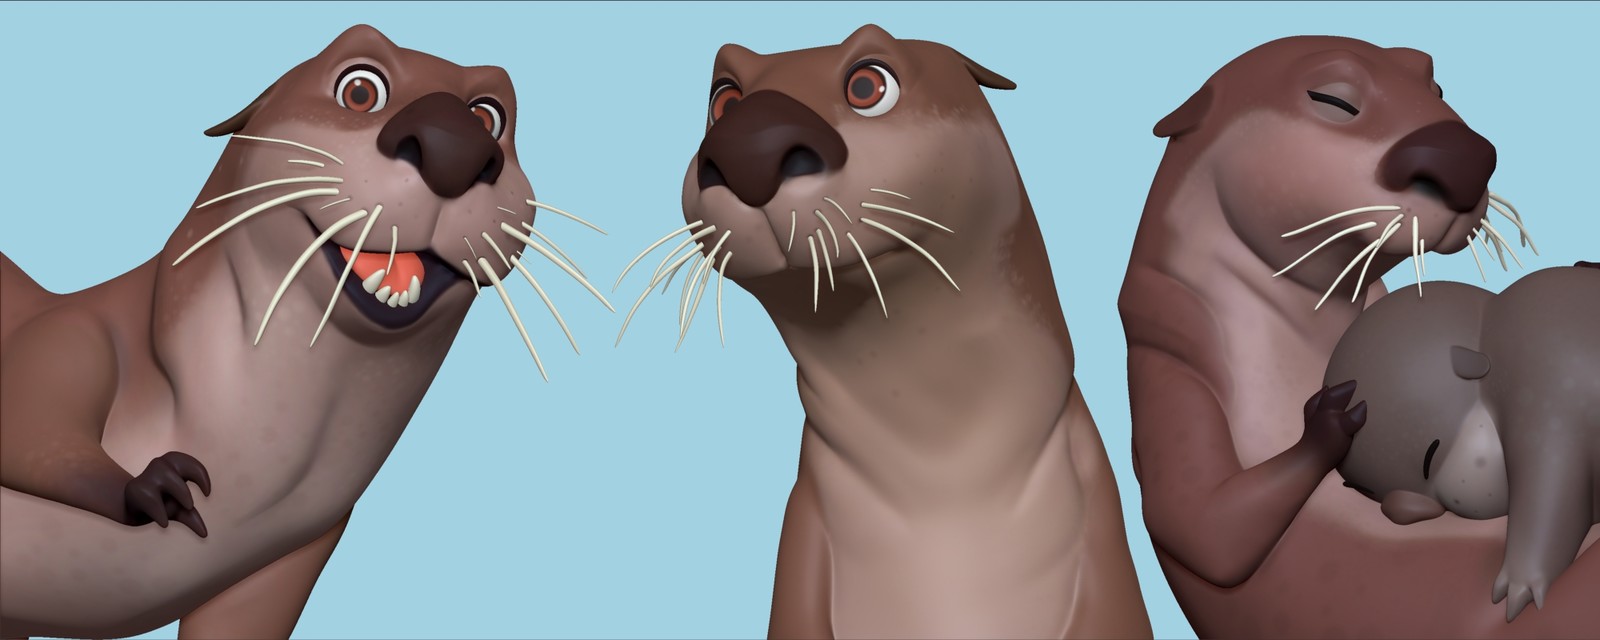 Zbrush Sketchbook: Otters